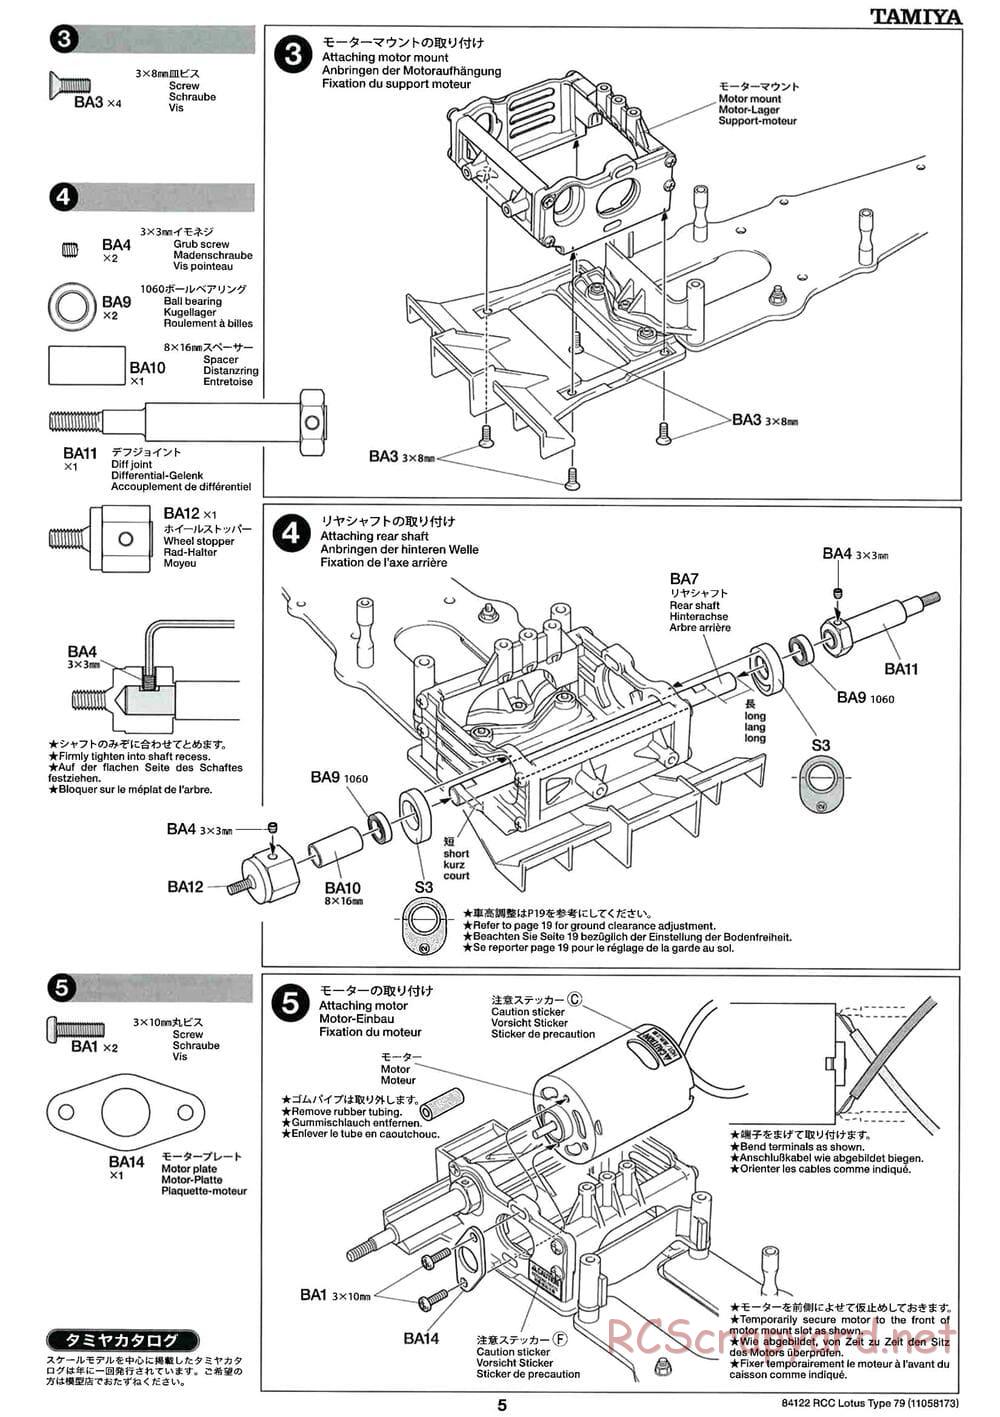 Tamiya - Lotus Type 79 - F104W Chassis - Manual - Page 5